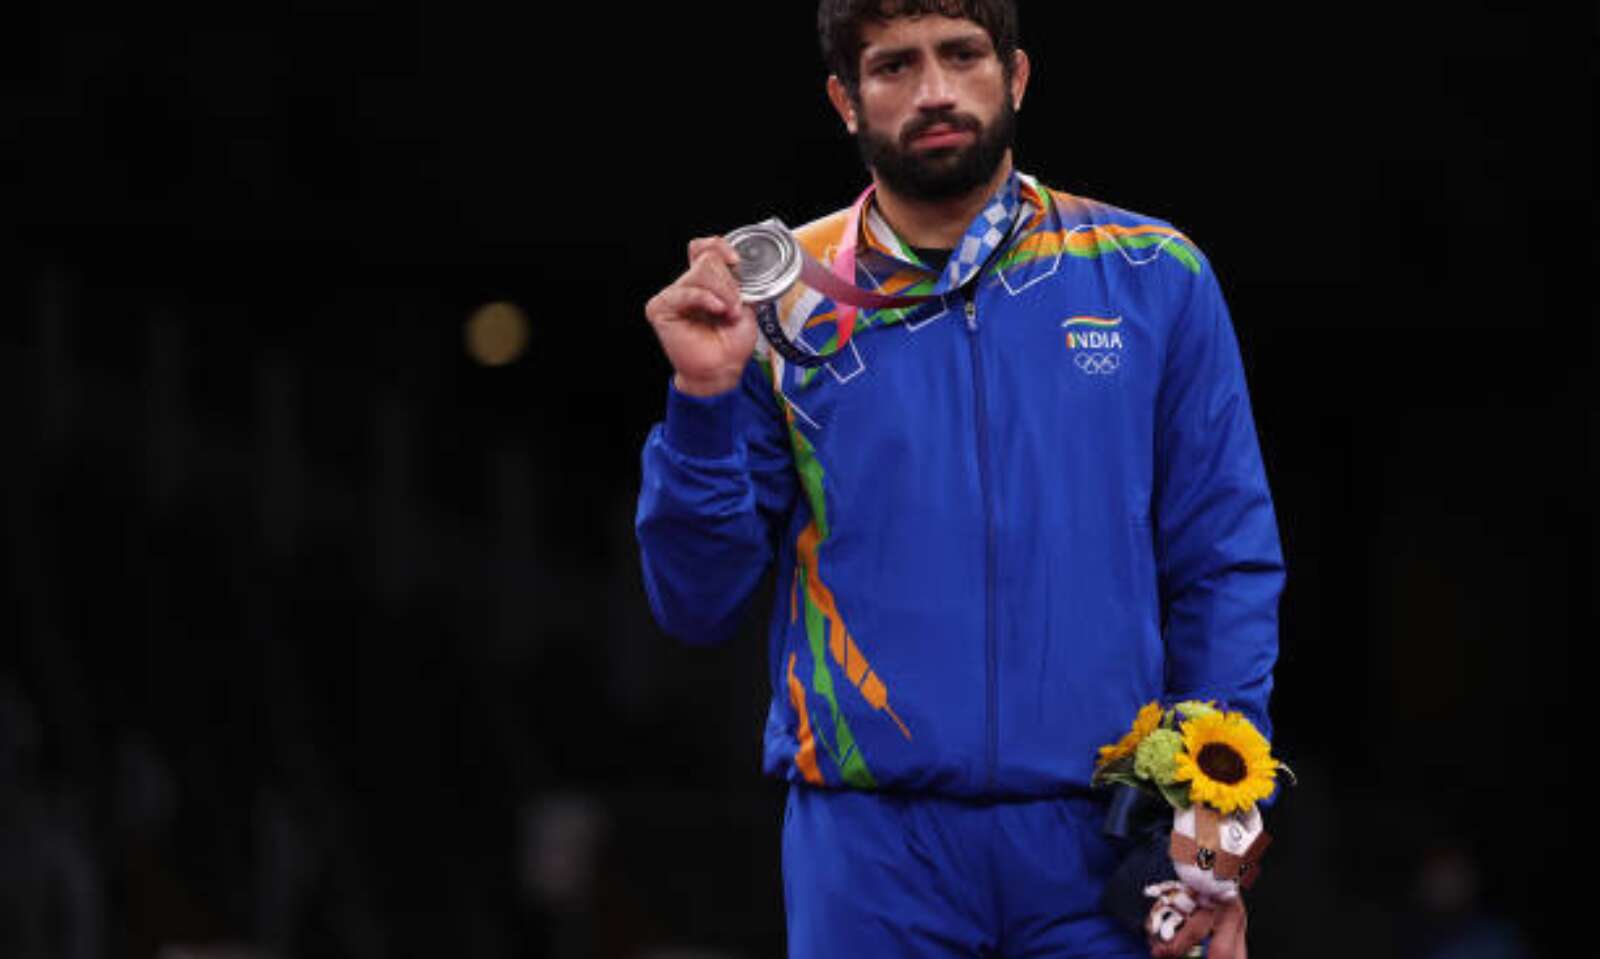 Photos wrestler ravi dahiyas silver medal moment on the tokyo olympics podium